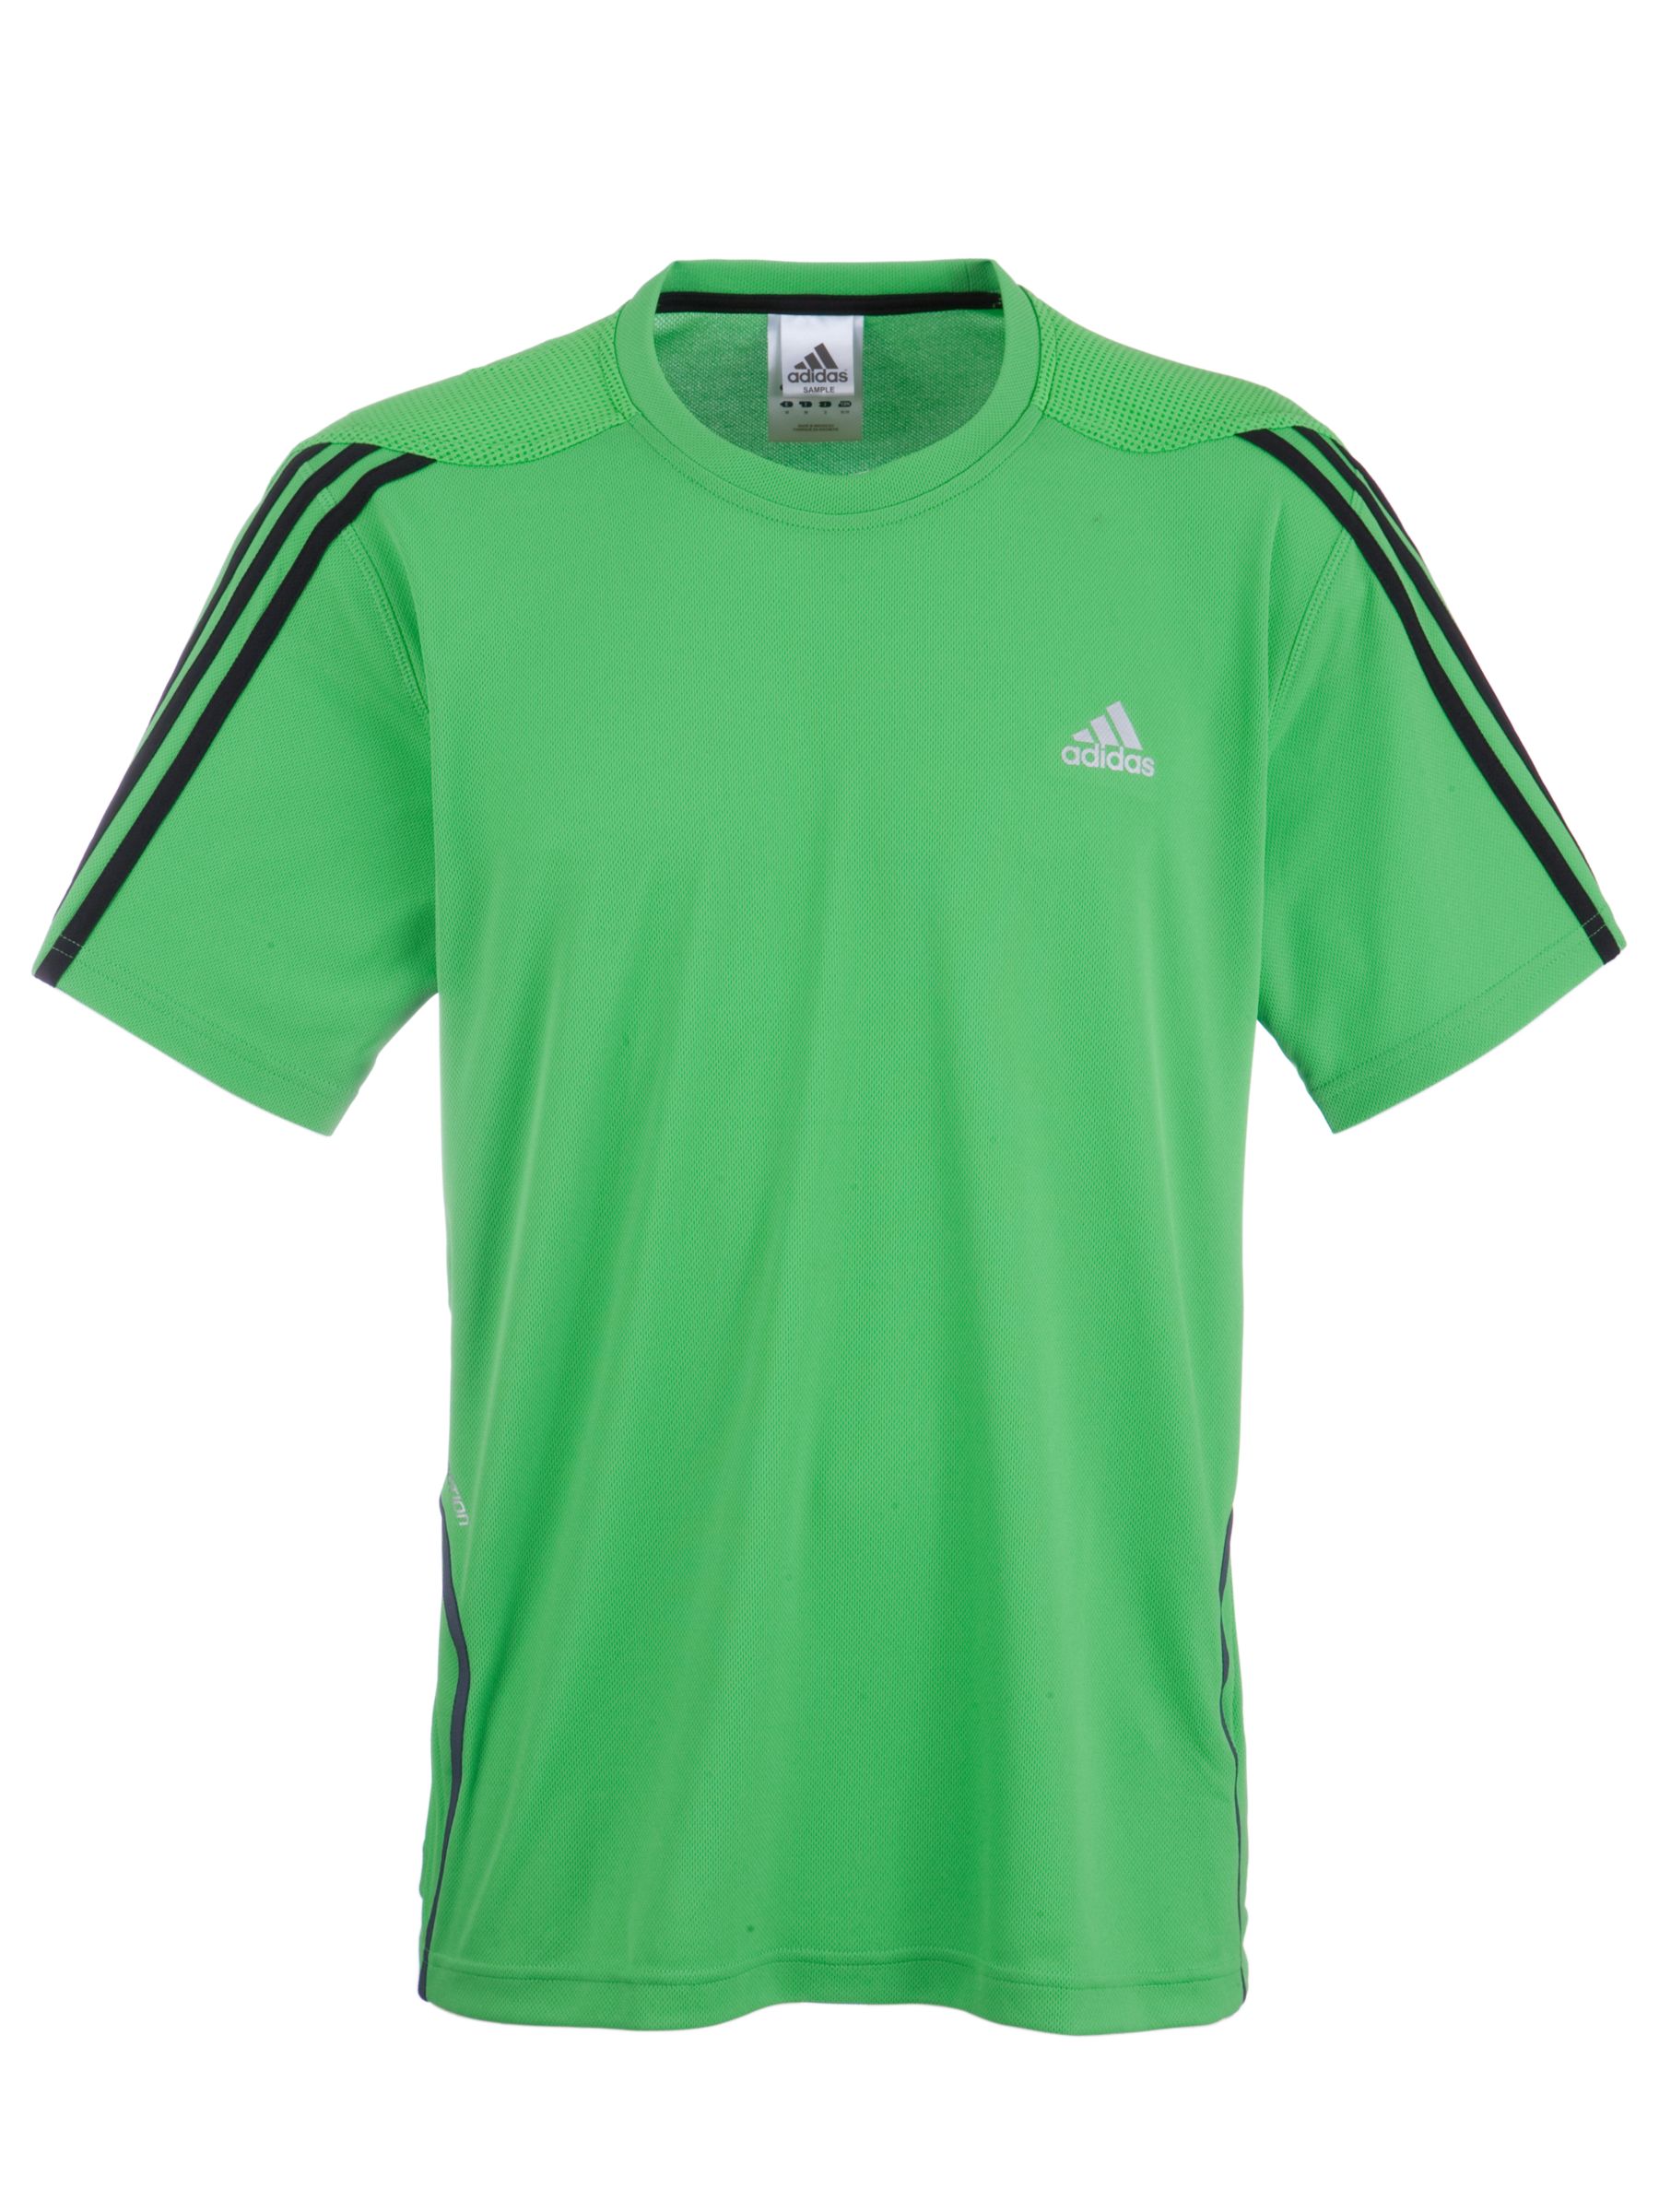 Adidas Response Short Sleeve T-Shirt, Green